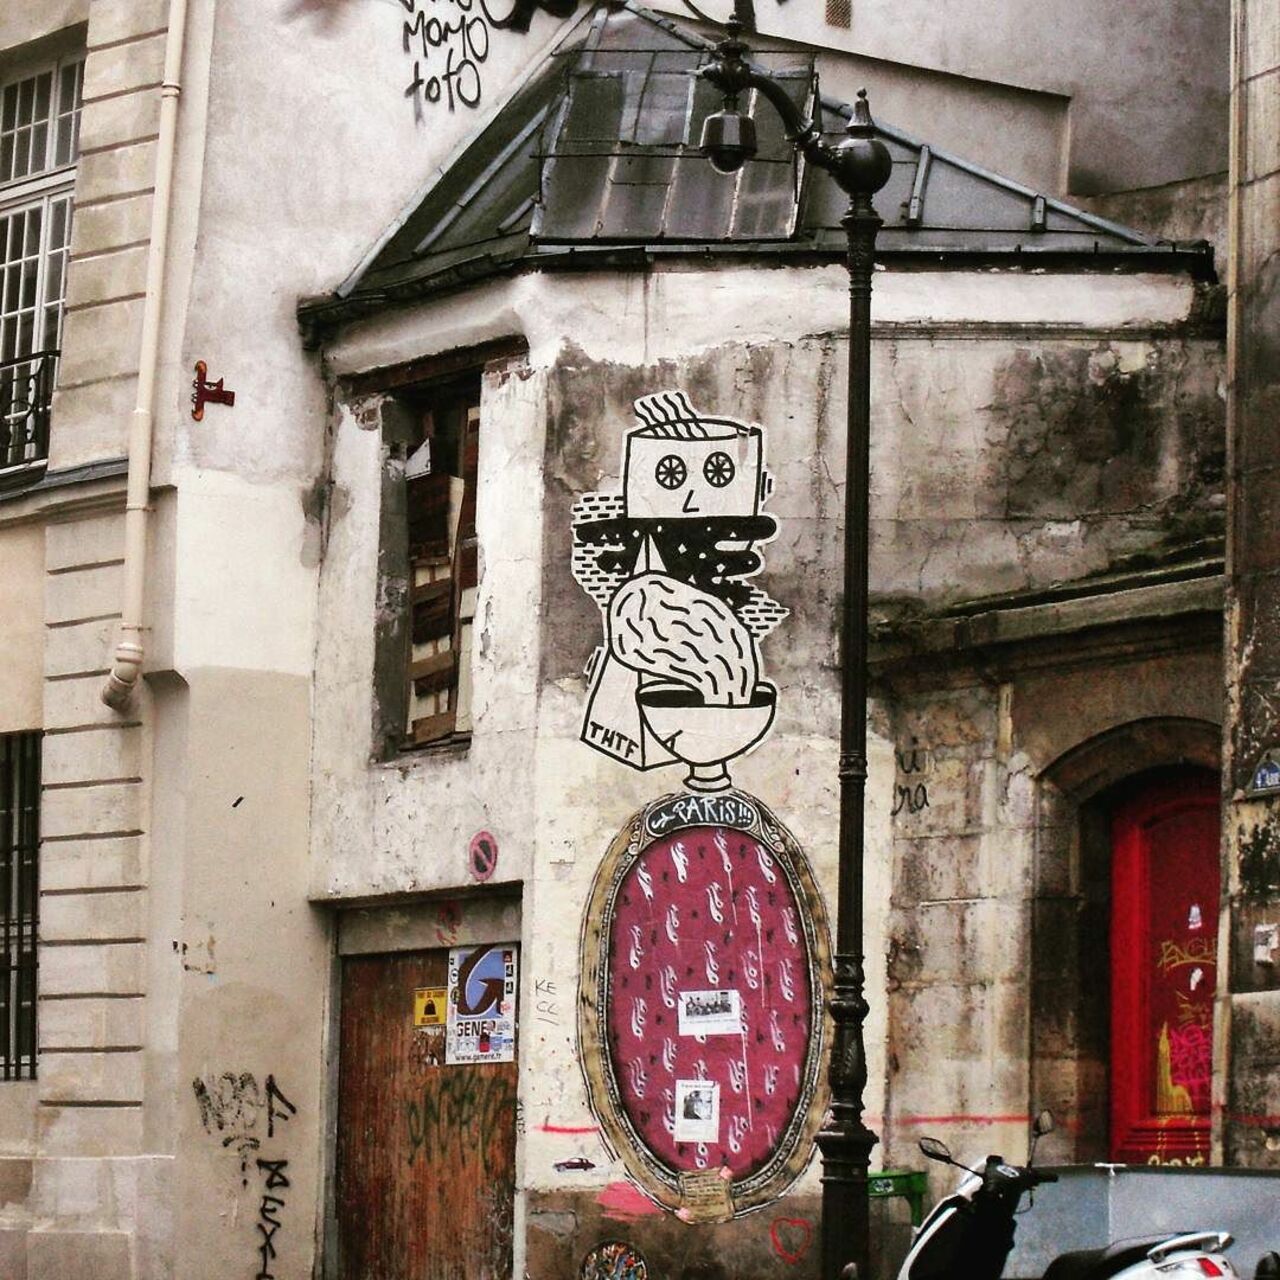 #Paris #graffiti photo by @ggayegg http://ift.tt/1H58hpE #StreetArt https://t.co/yvi68rjjow